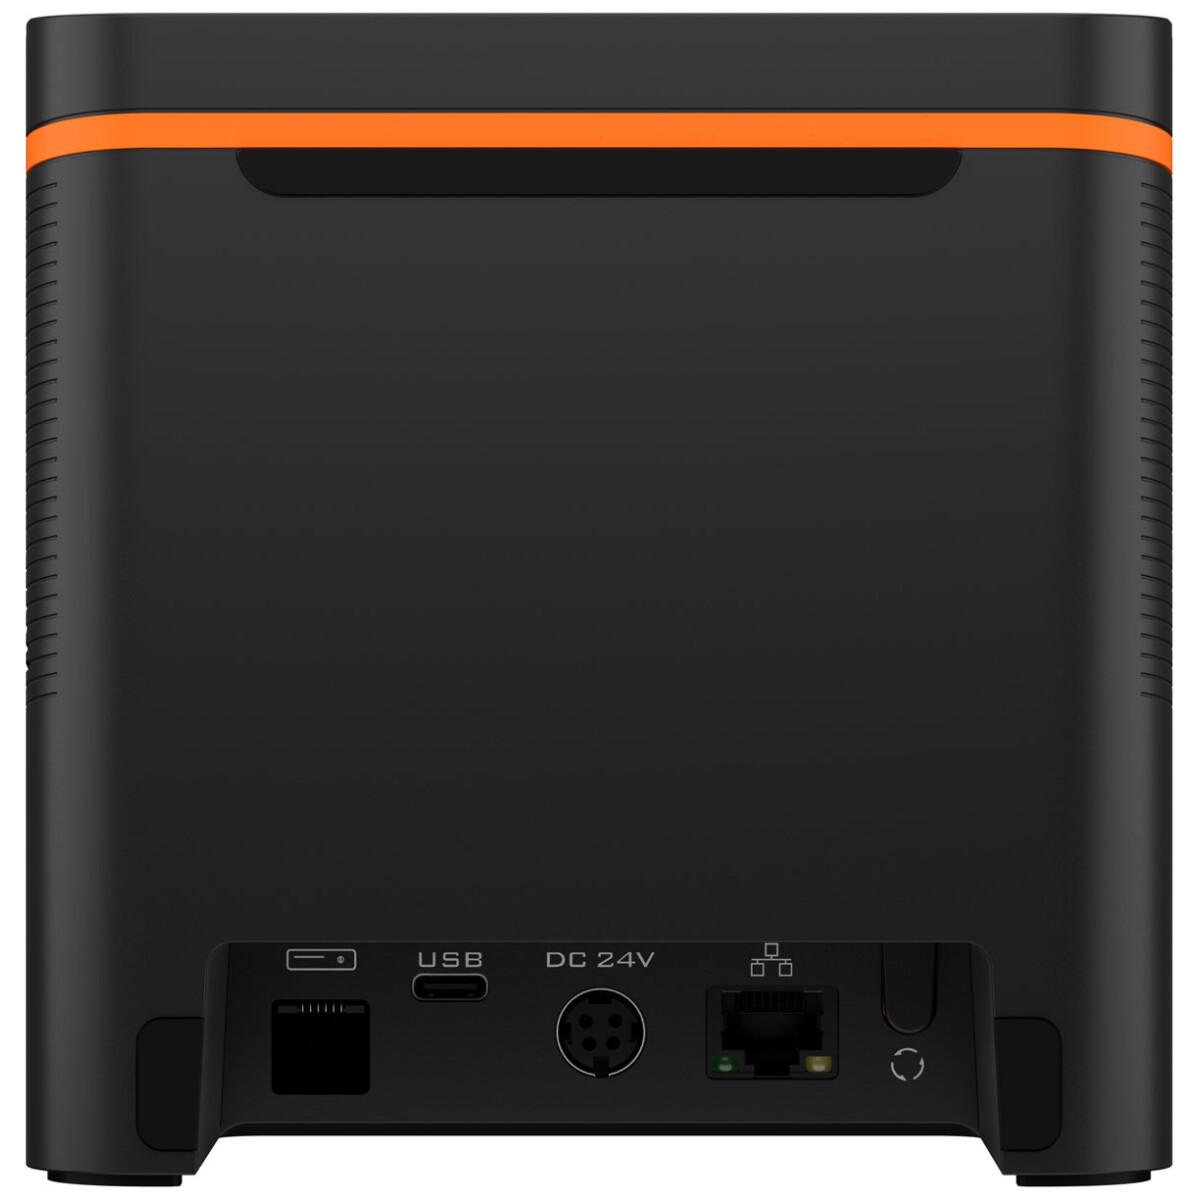 Sunmi NT311 - 80mm Cloud Printer - LAN, WiFi, USB, Bluetooth